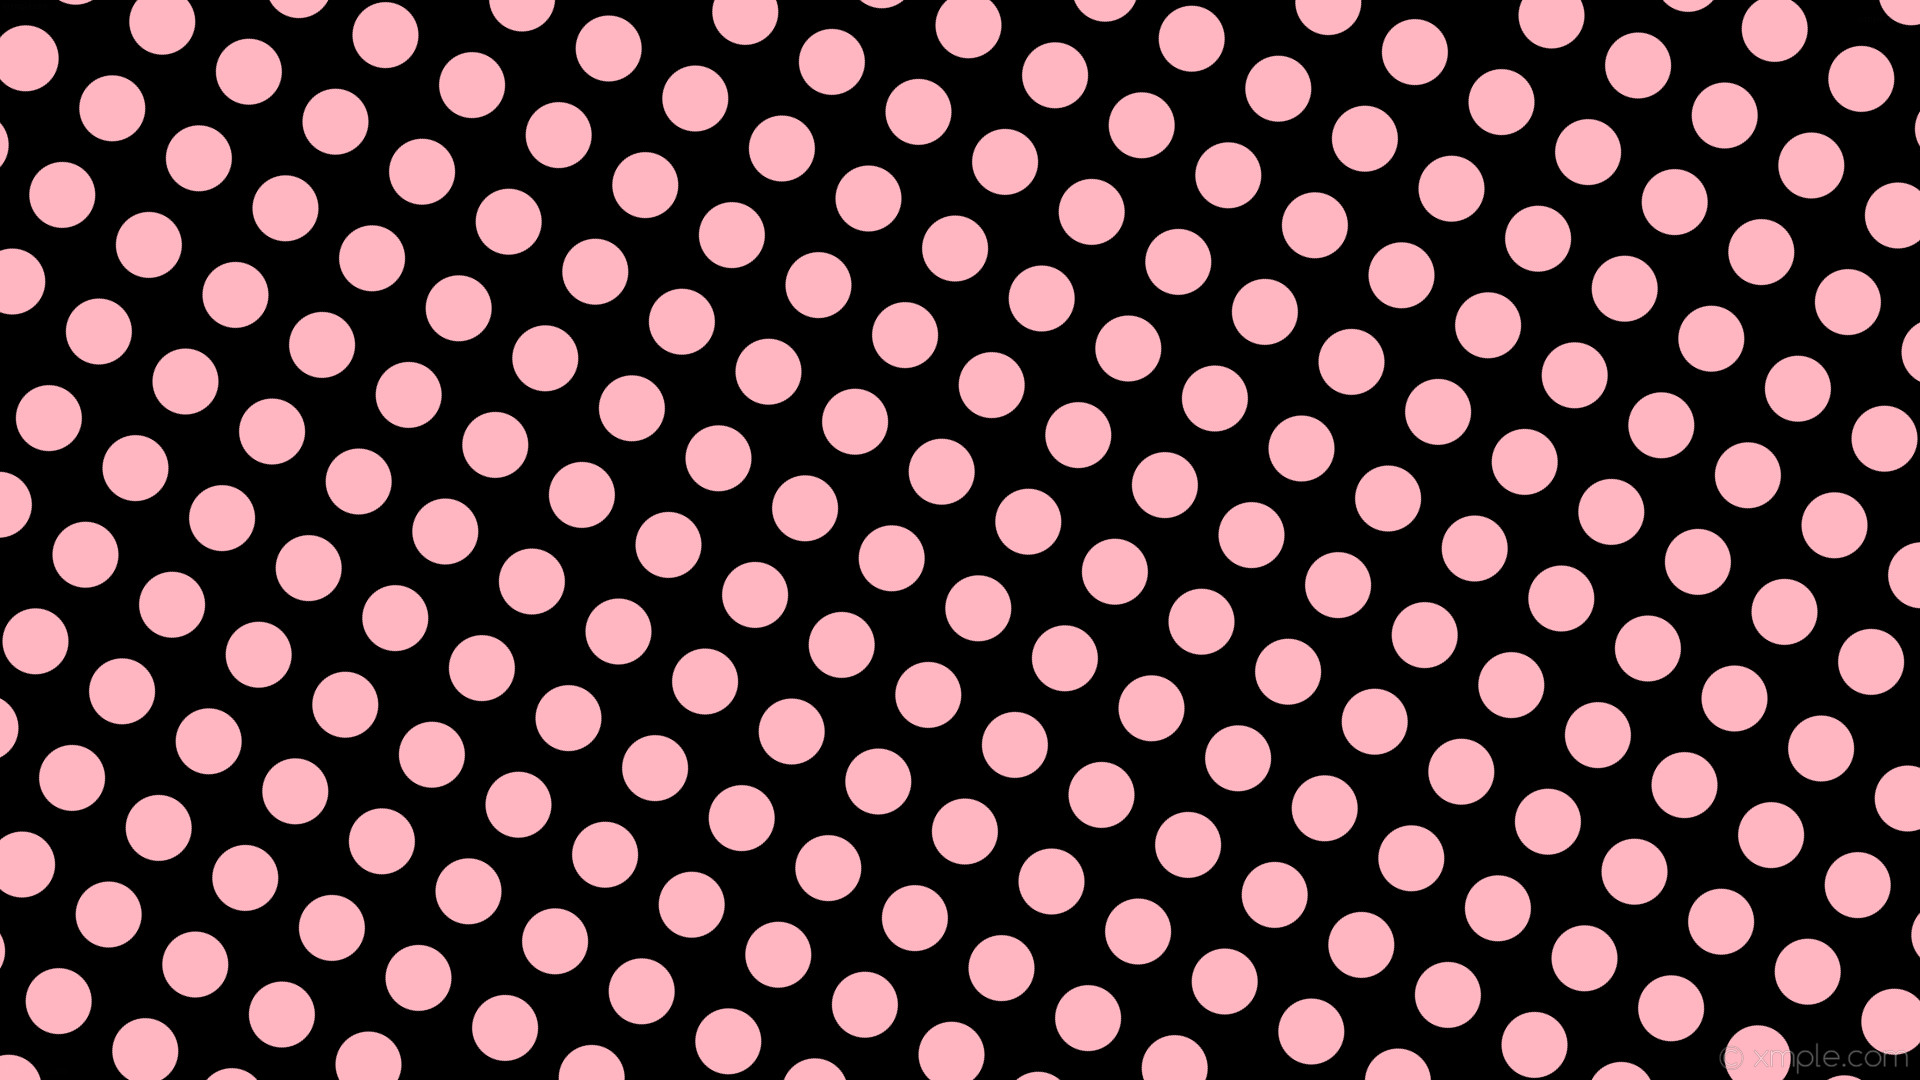 Wallpaper spots black pink polka dots light pink #ffb6c1 330 66px 100px